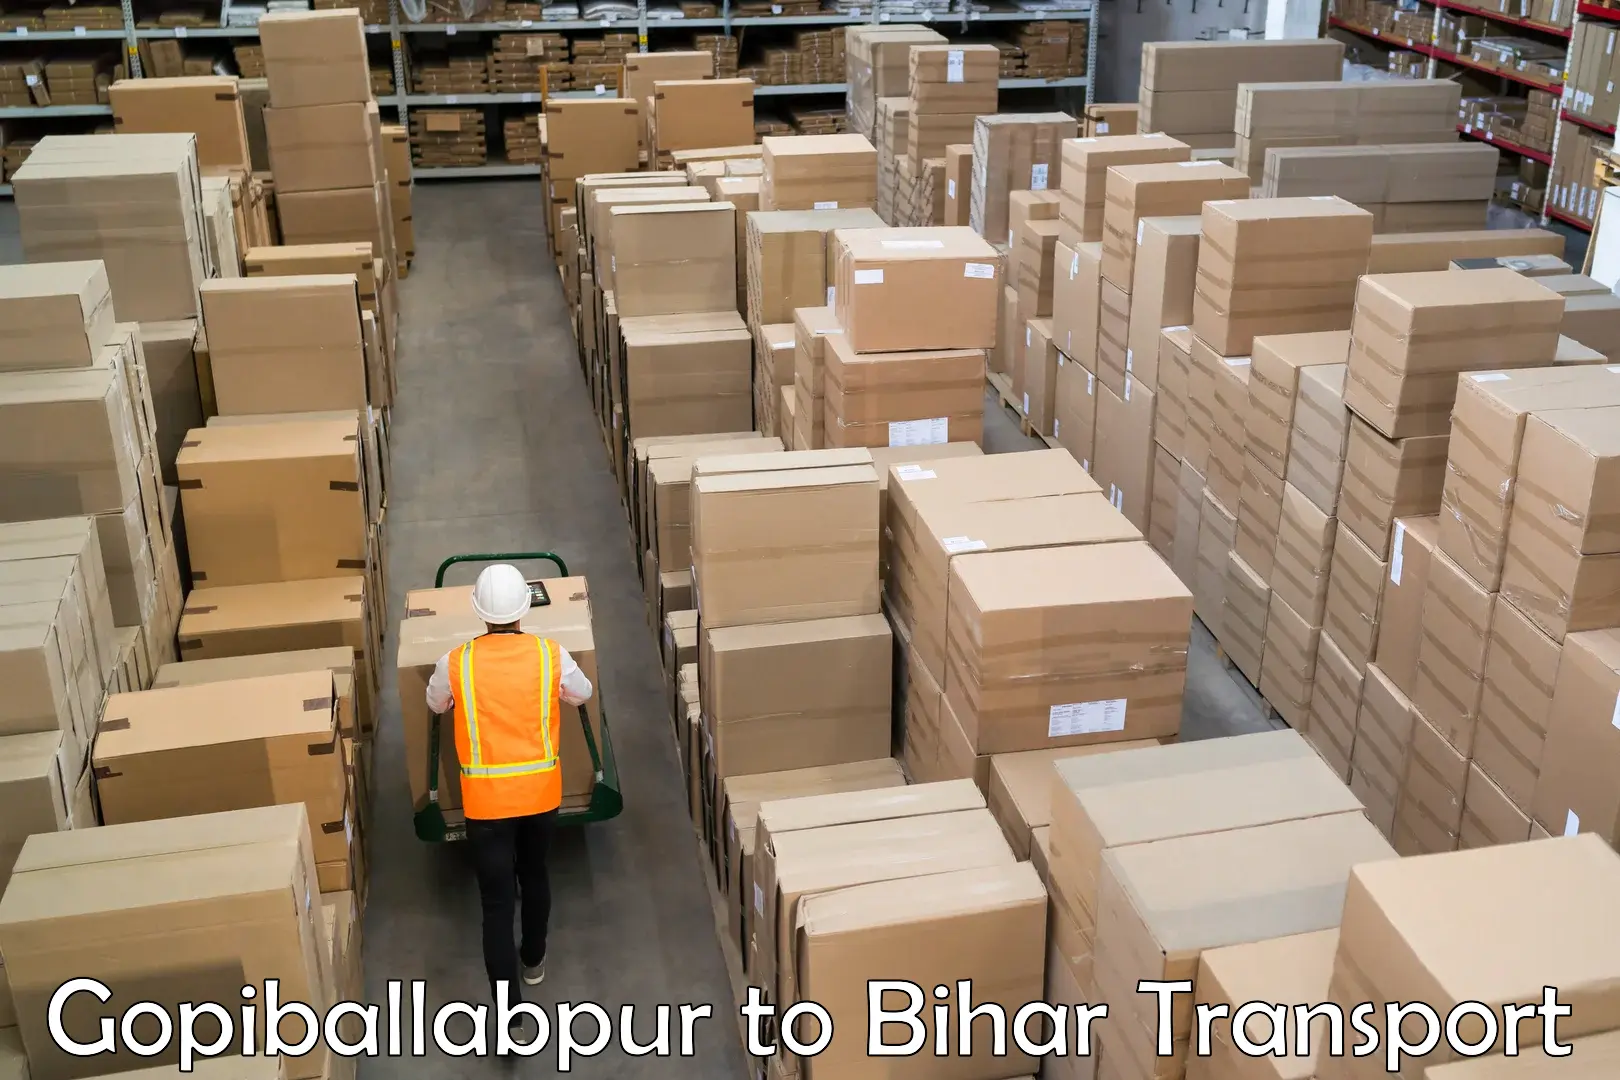 Goods delivery service Gopiballabpur to Bihar